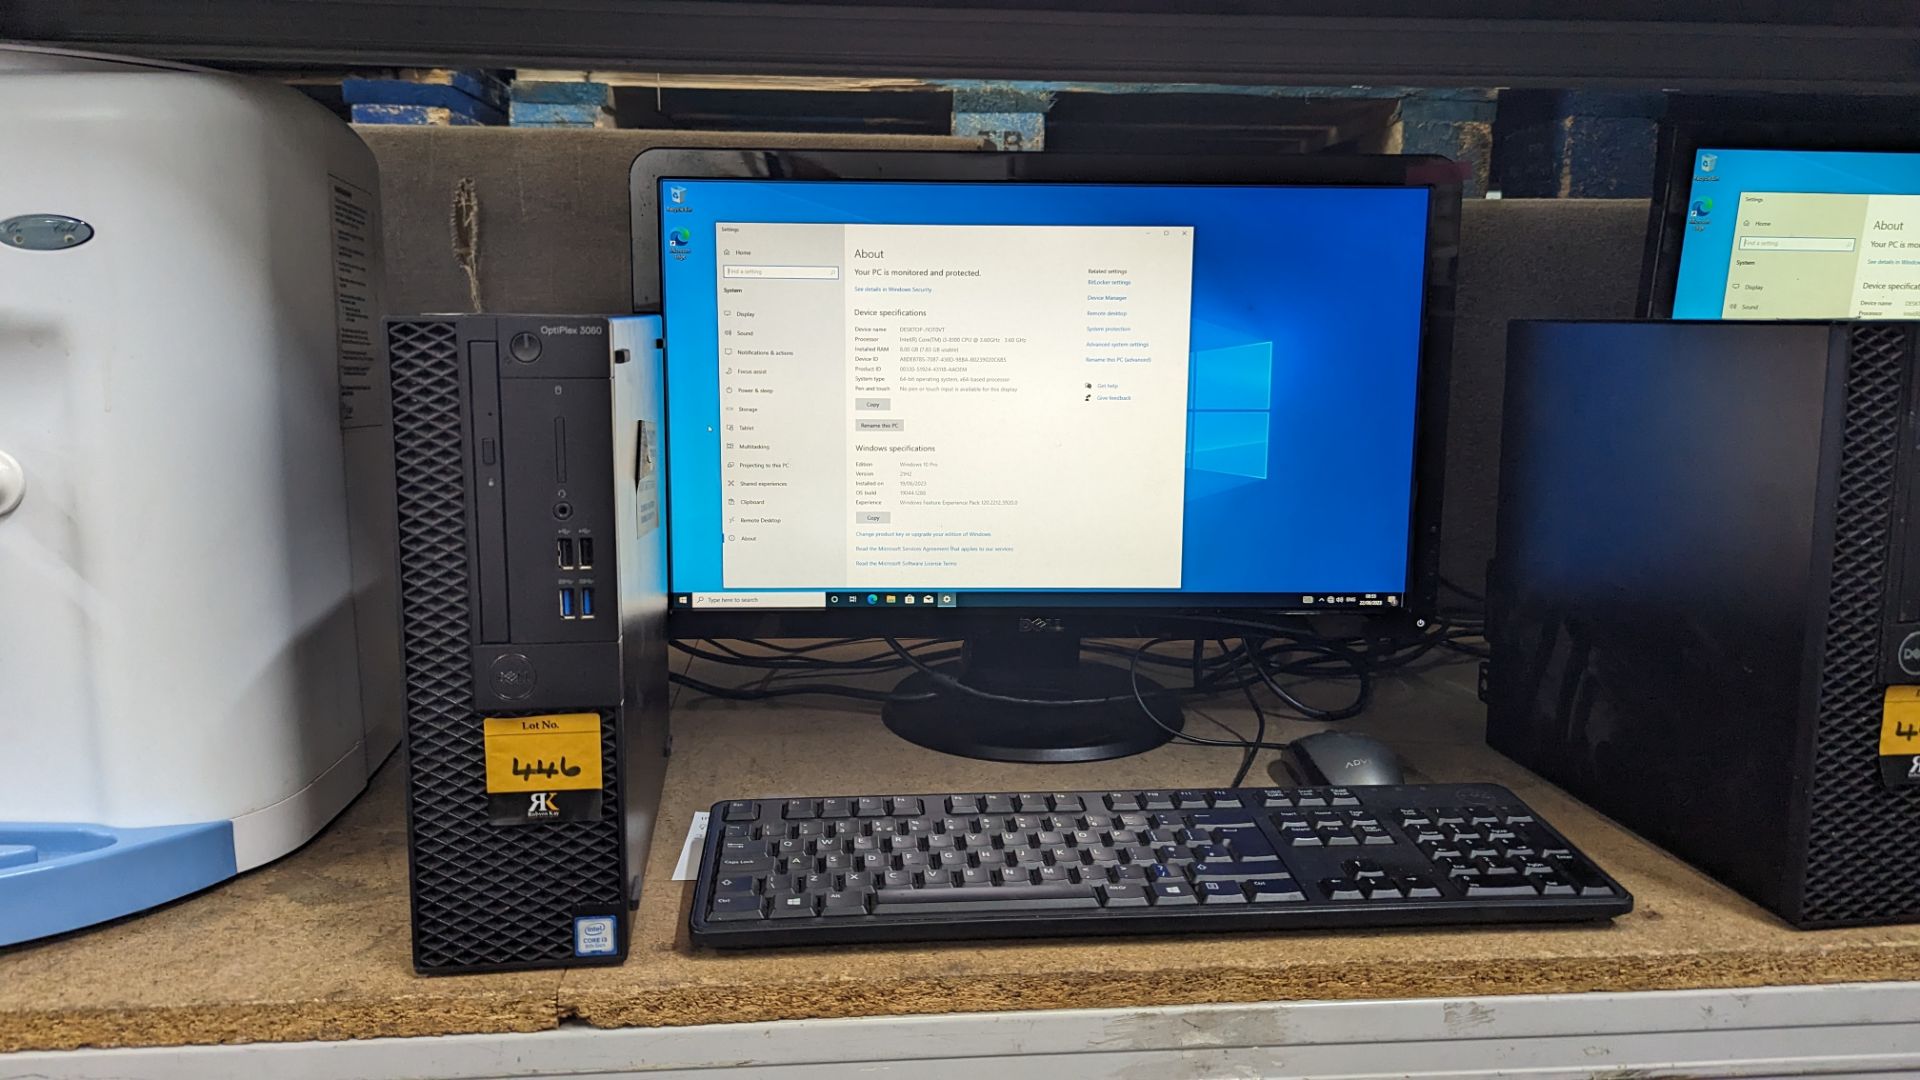 Dell OptiPlex 3060 compact desktop computer with Intel Core i3 8th Gen processor, 8GB RAM, 250GB SSD - Image 2 of 7